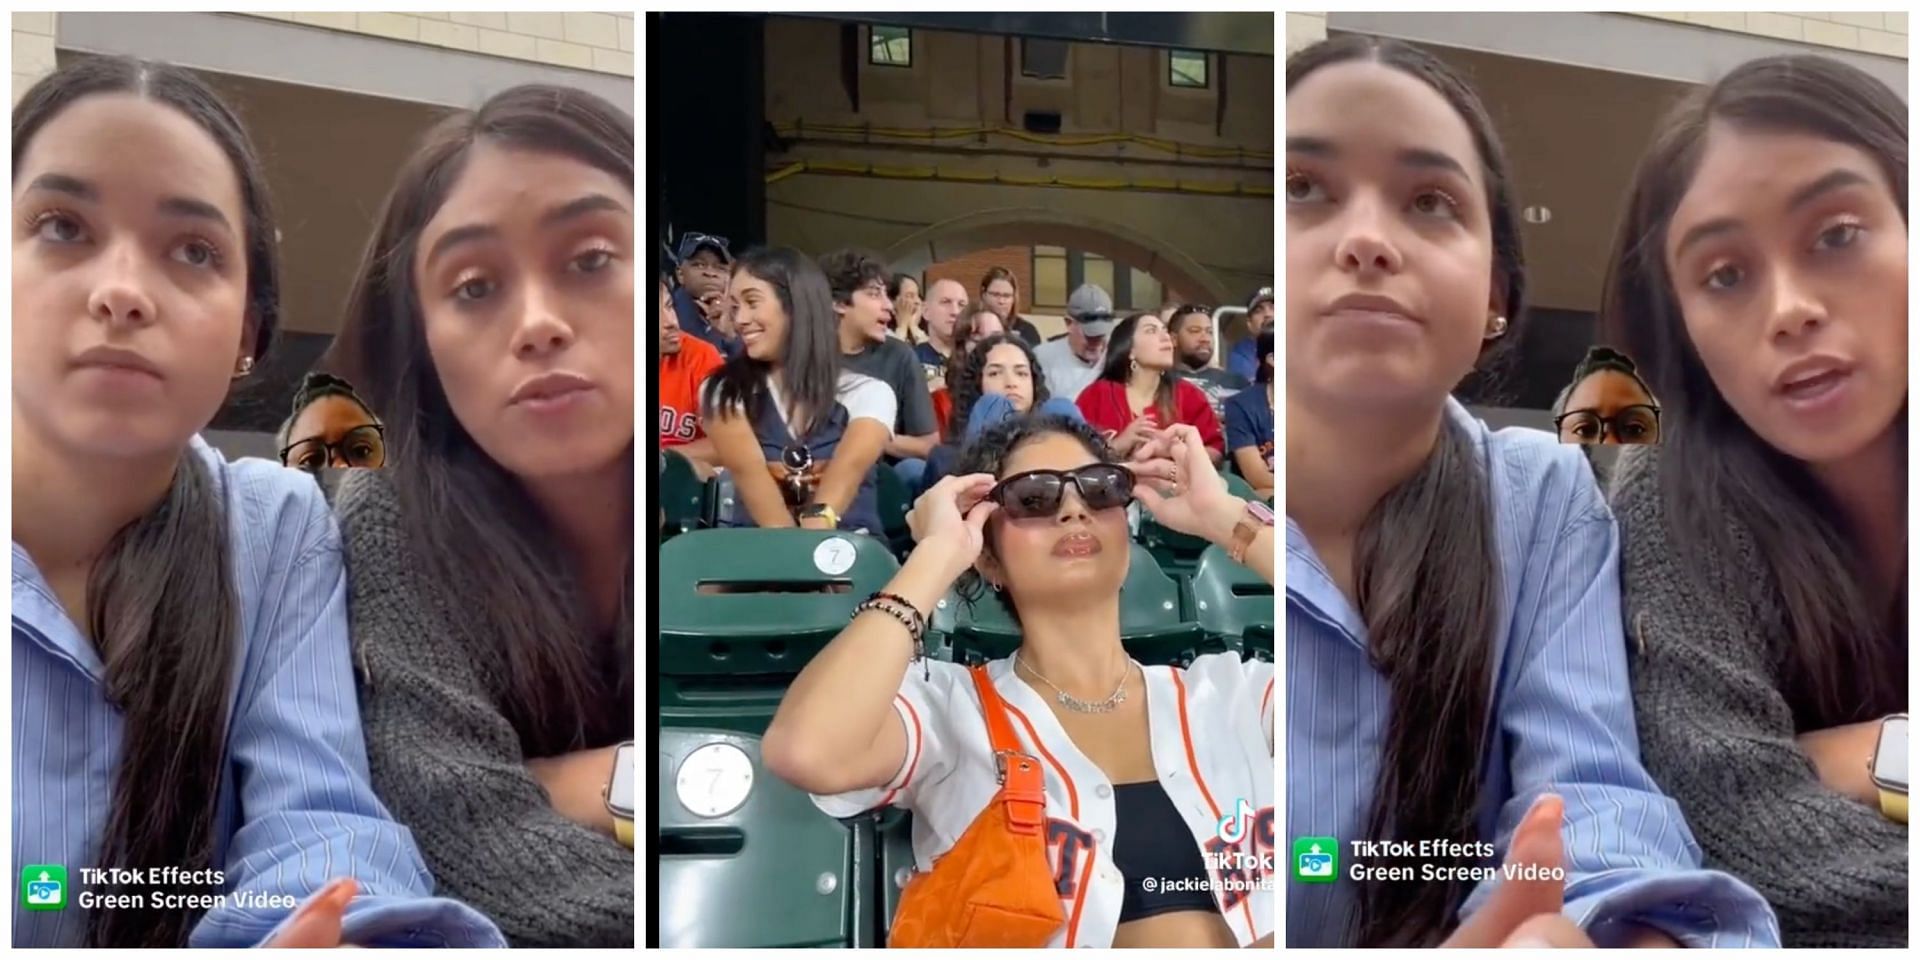 Houston Astros 'mean girls' apologize after viral TikTok video